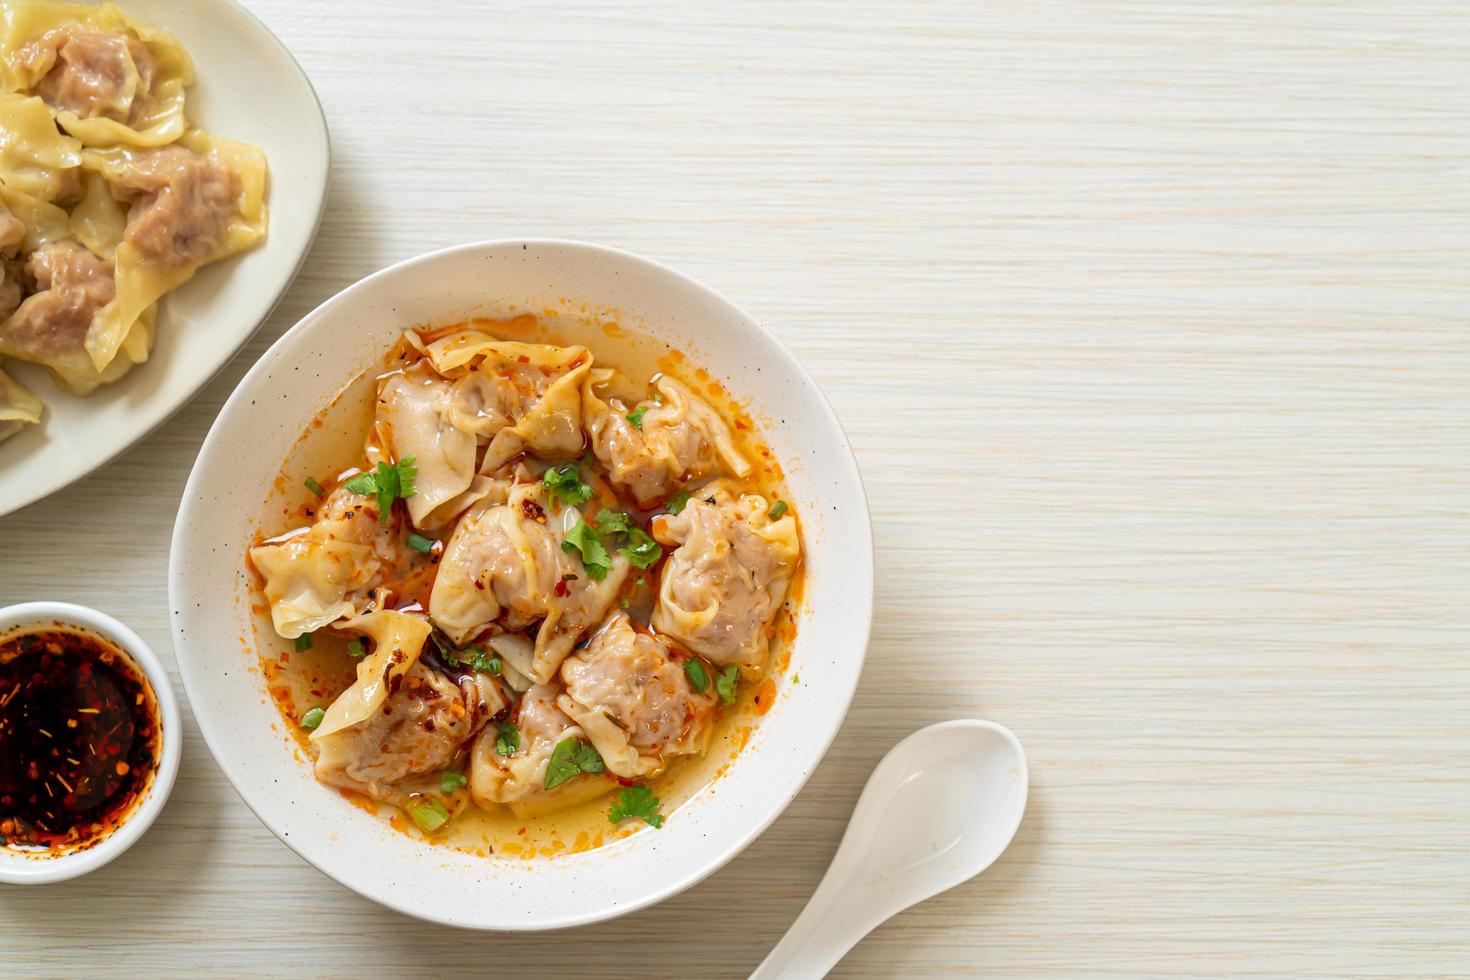 Pork wonton soup or pork dumplings soup with roasted chili - Asian food style photo